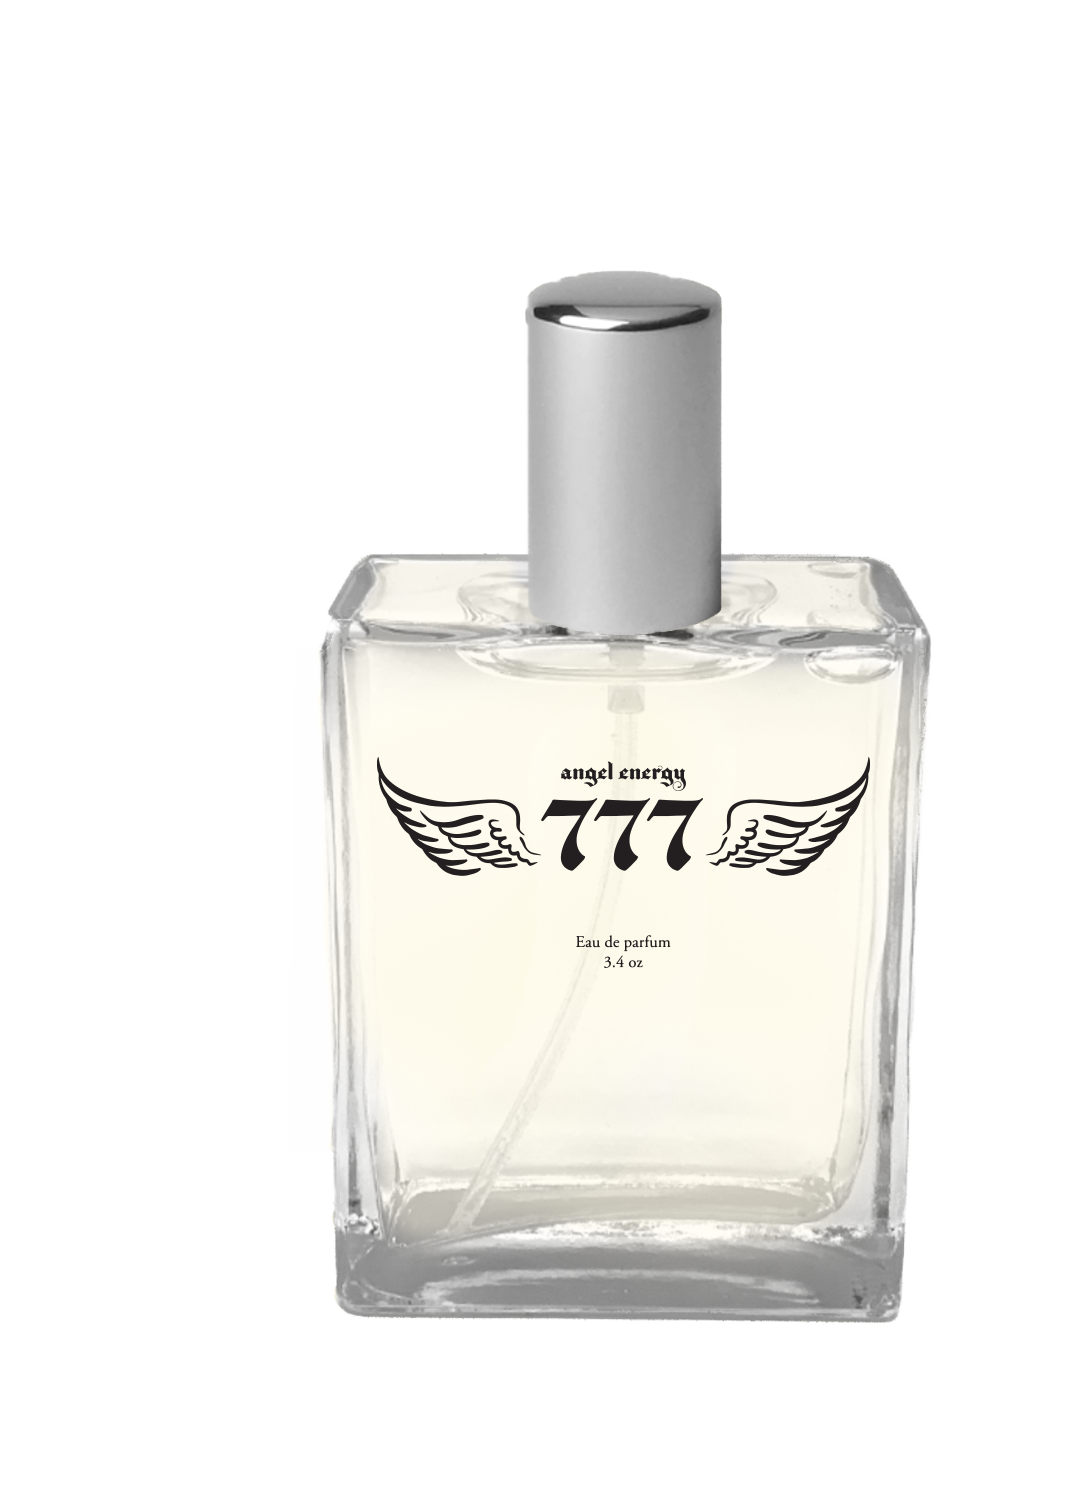 777 perfume